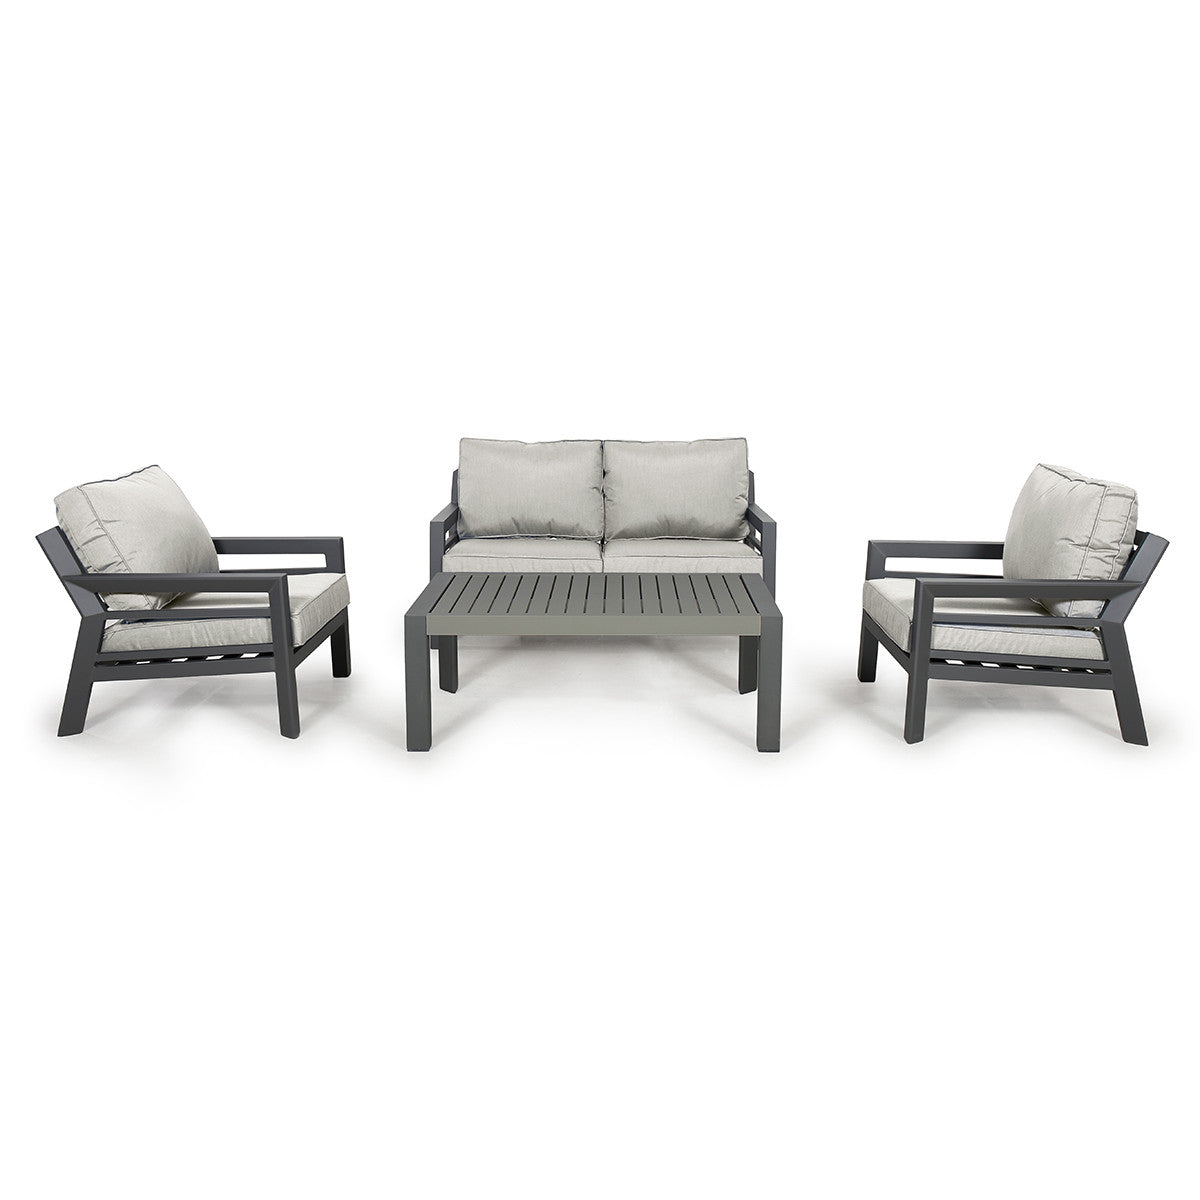 New York Outdoor Fabric 2 Seat Sofa Set